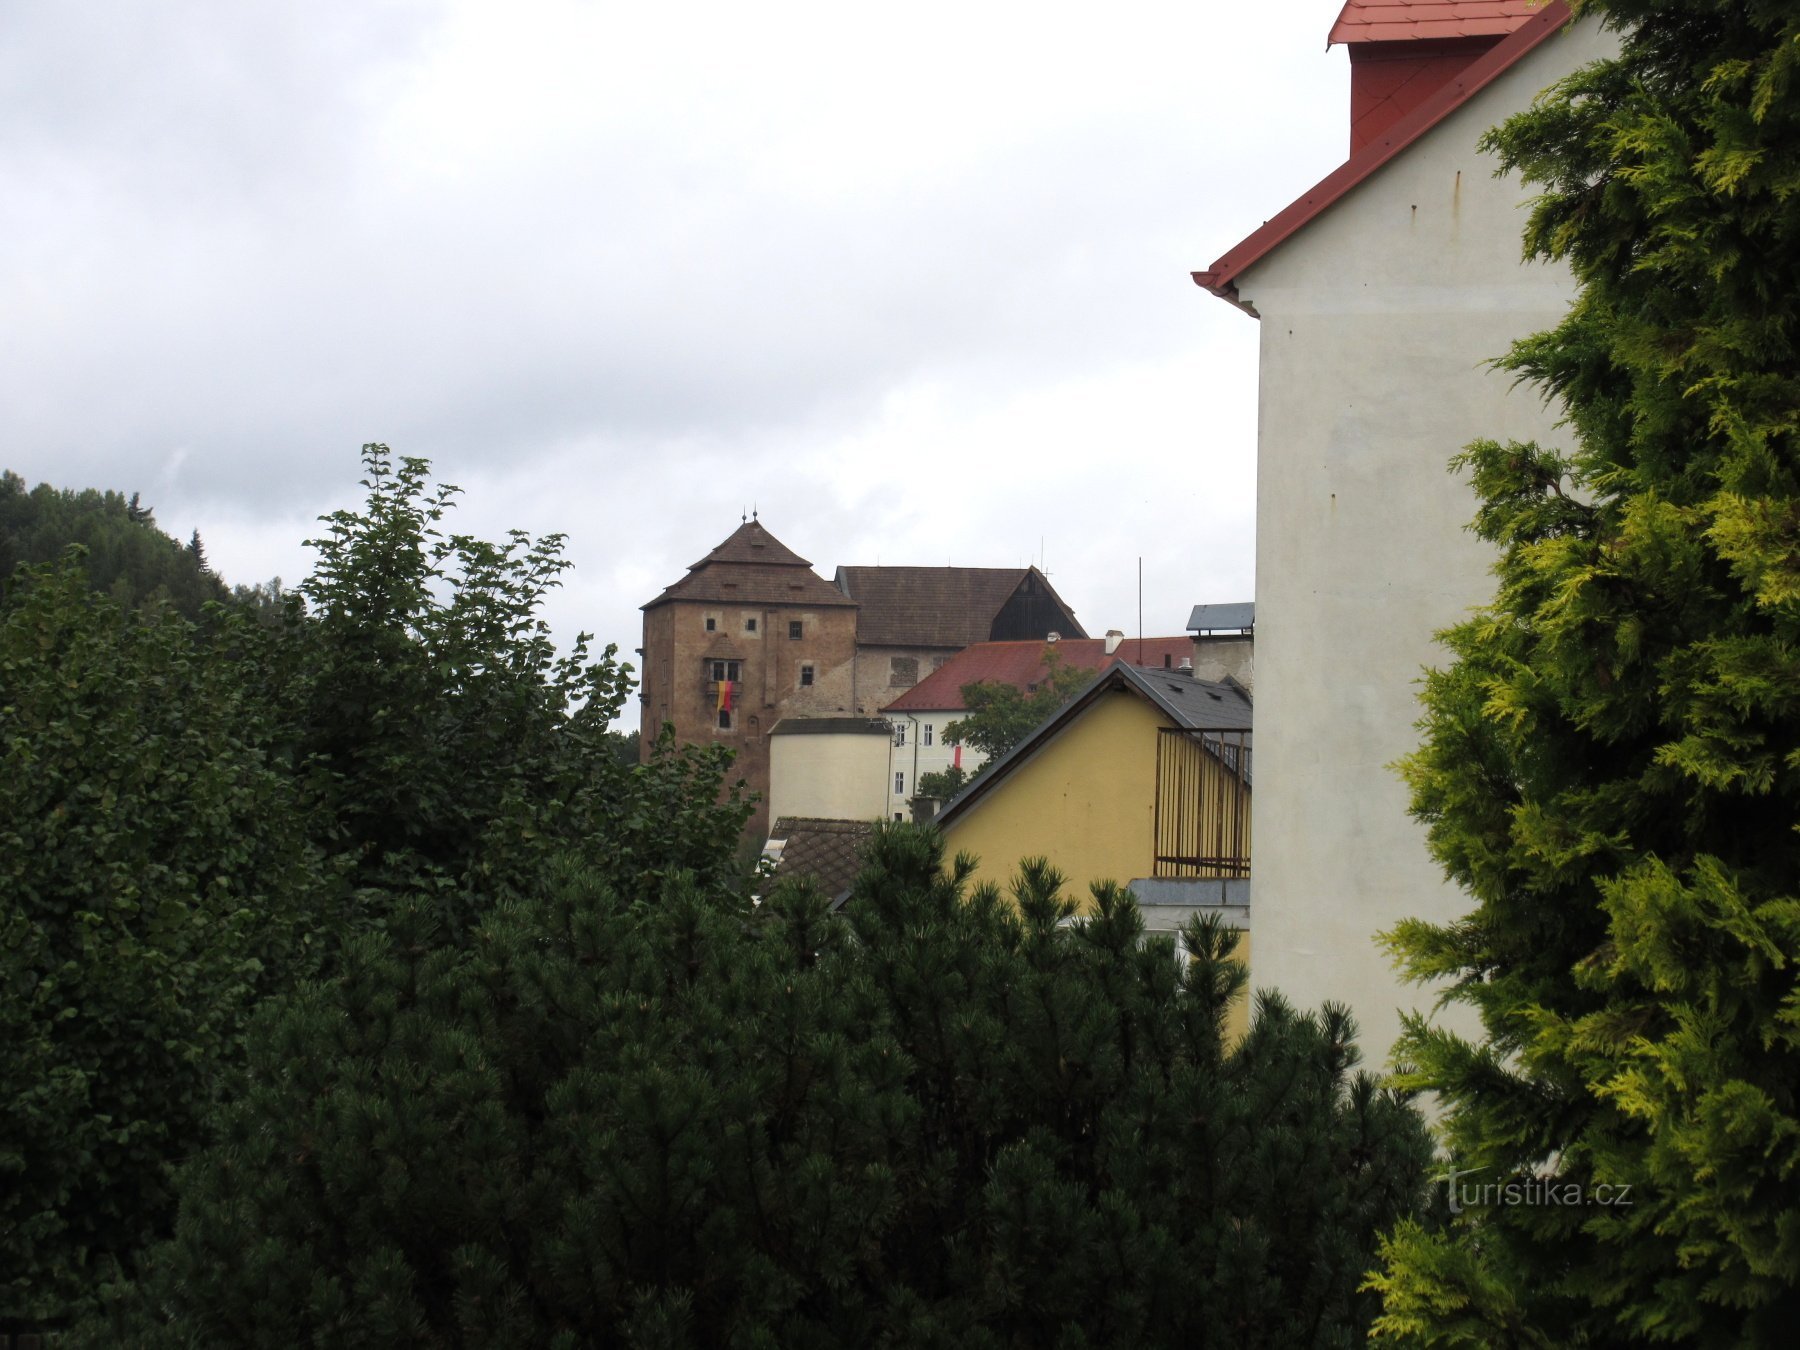 Bečov nad Teplou – Stadt, Burg, Schloss und Lehrpfad